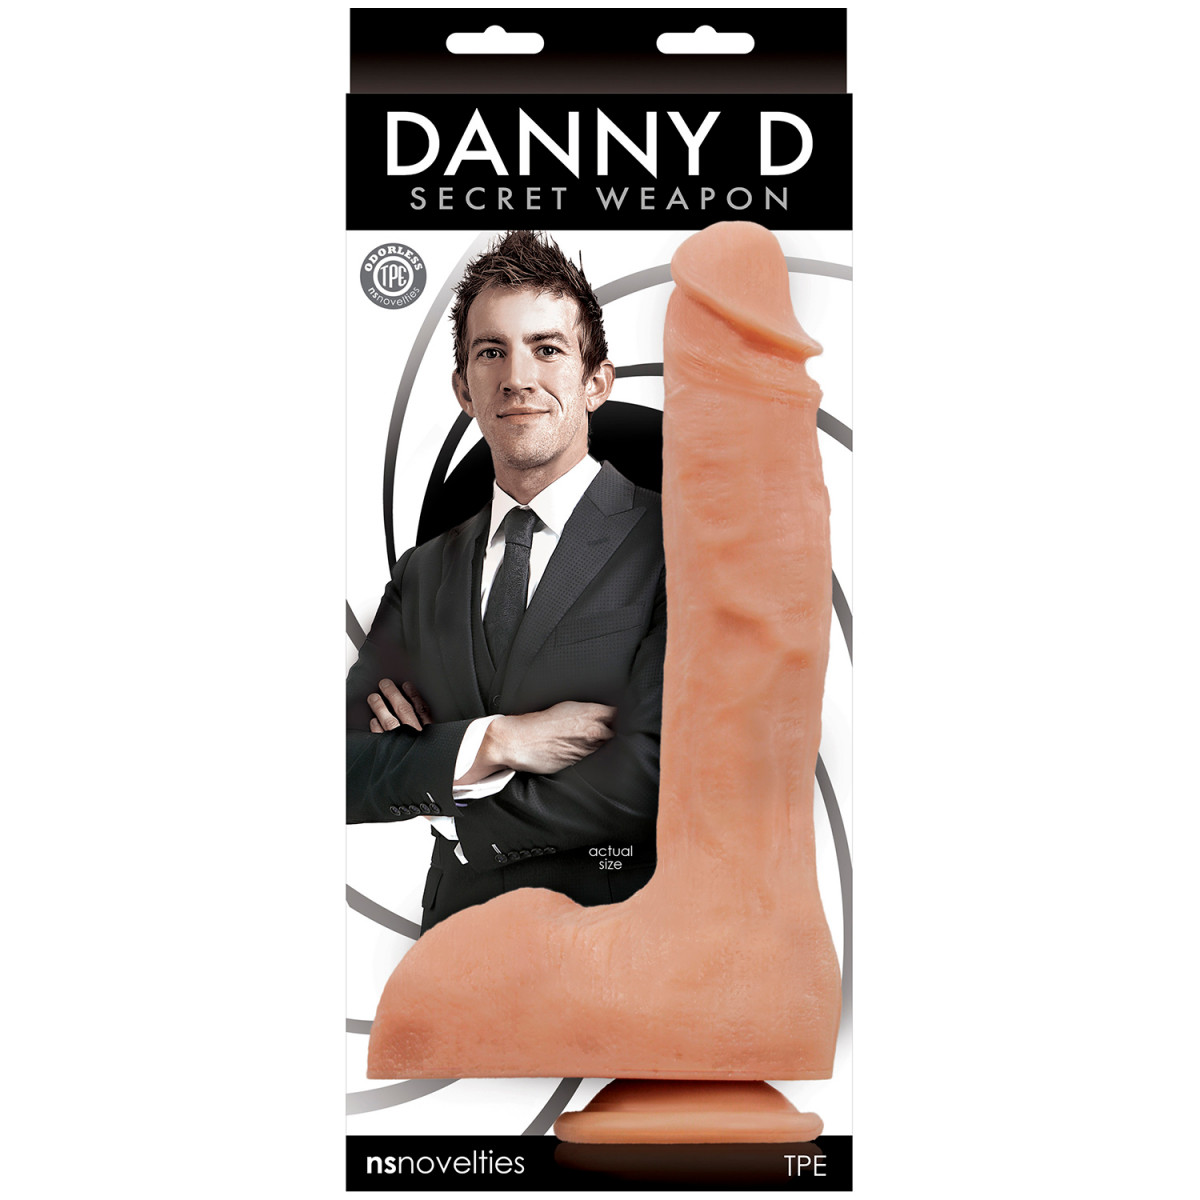 Danny D's Dick